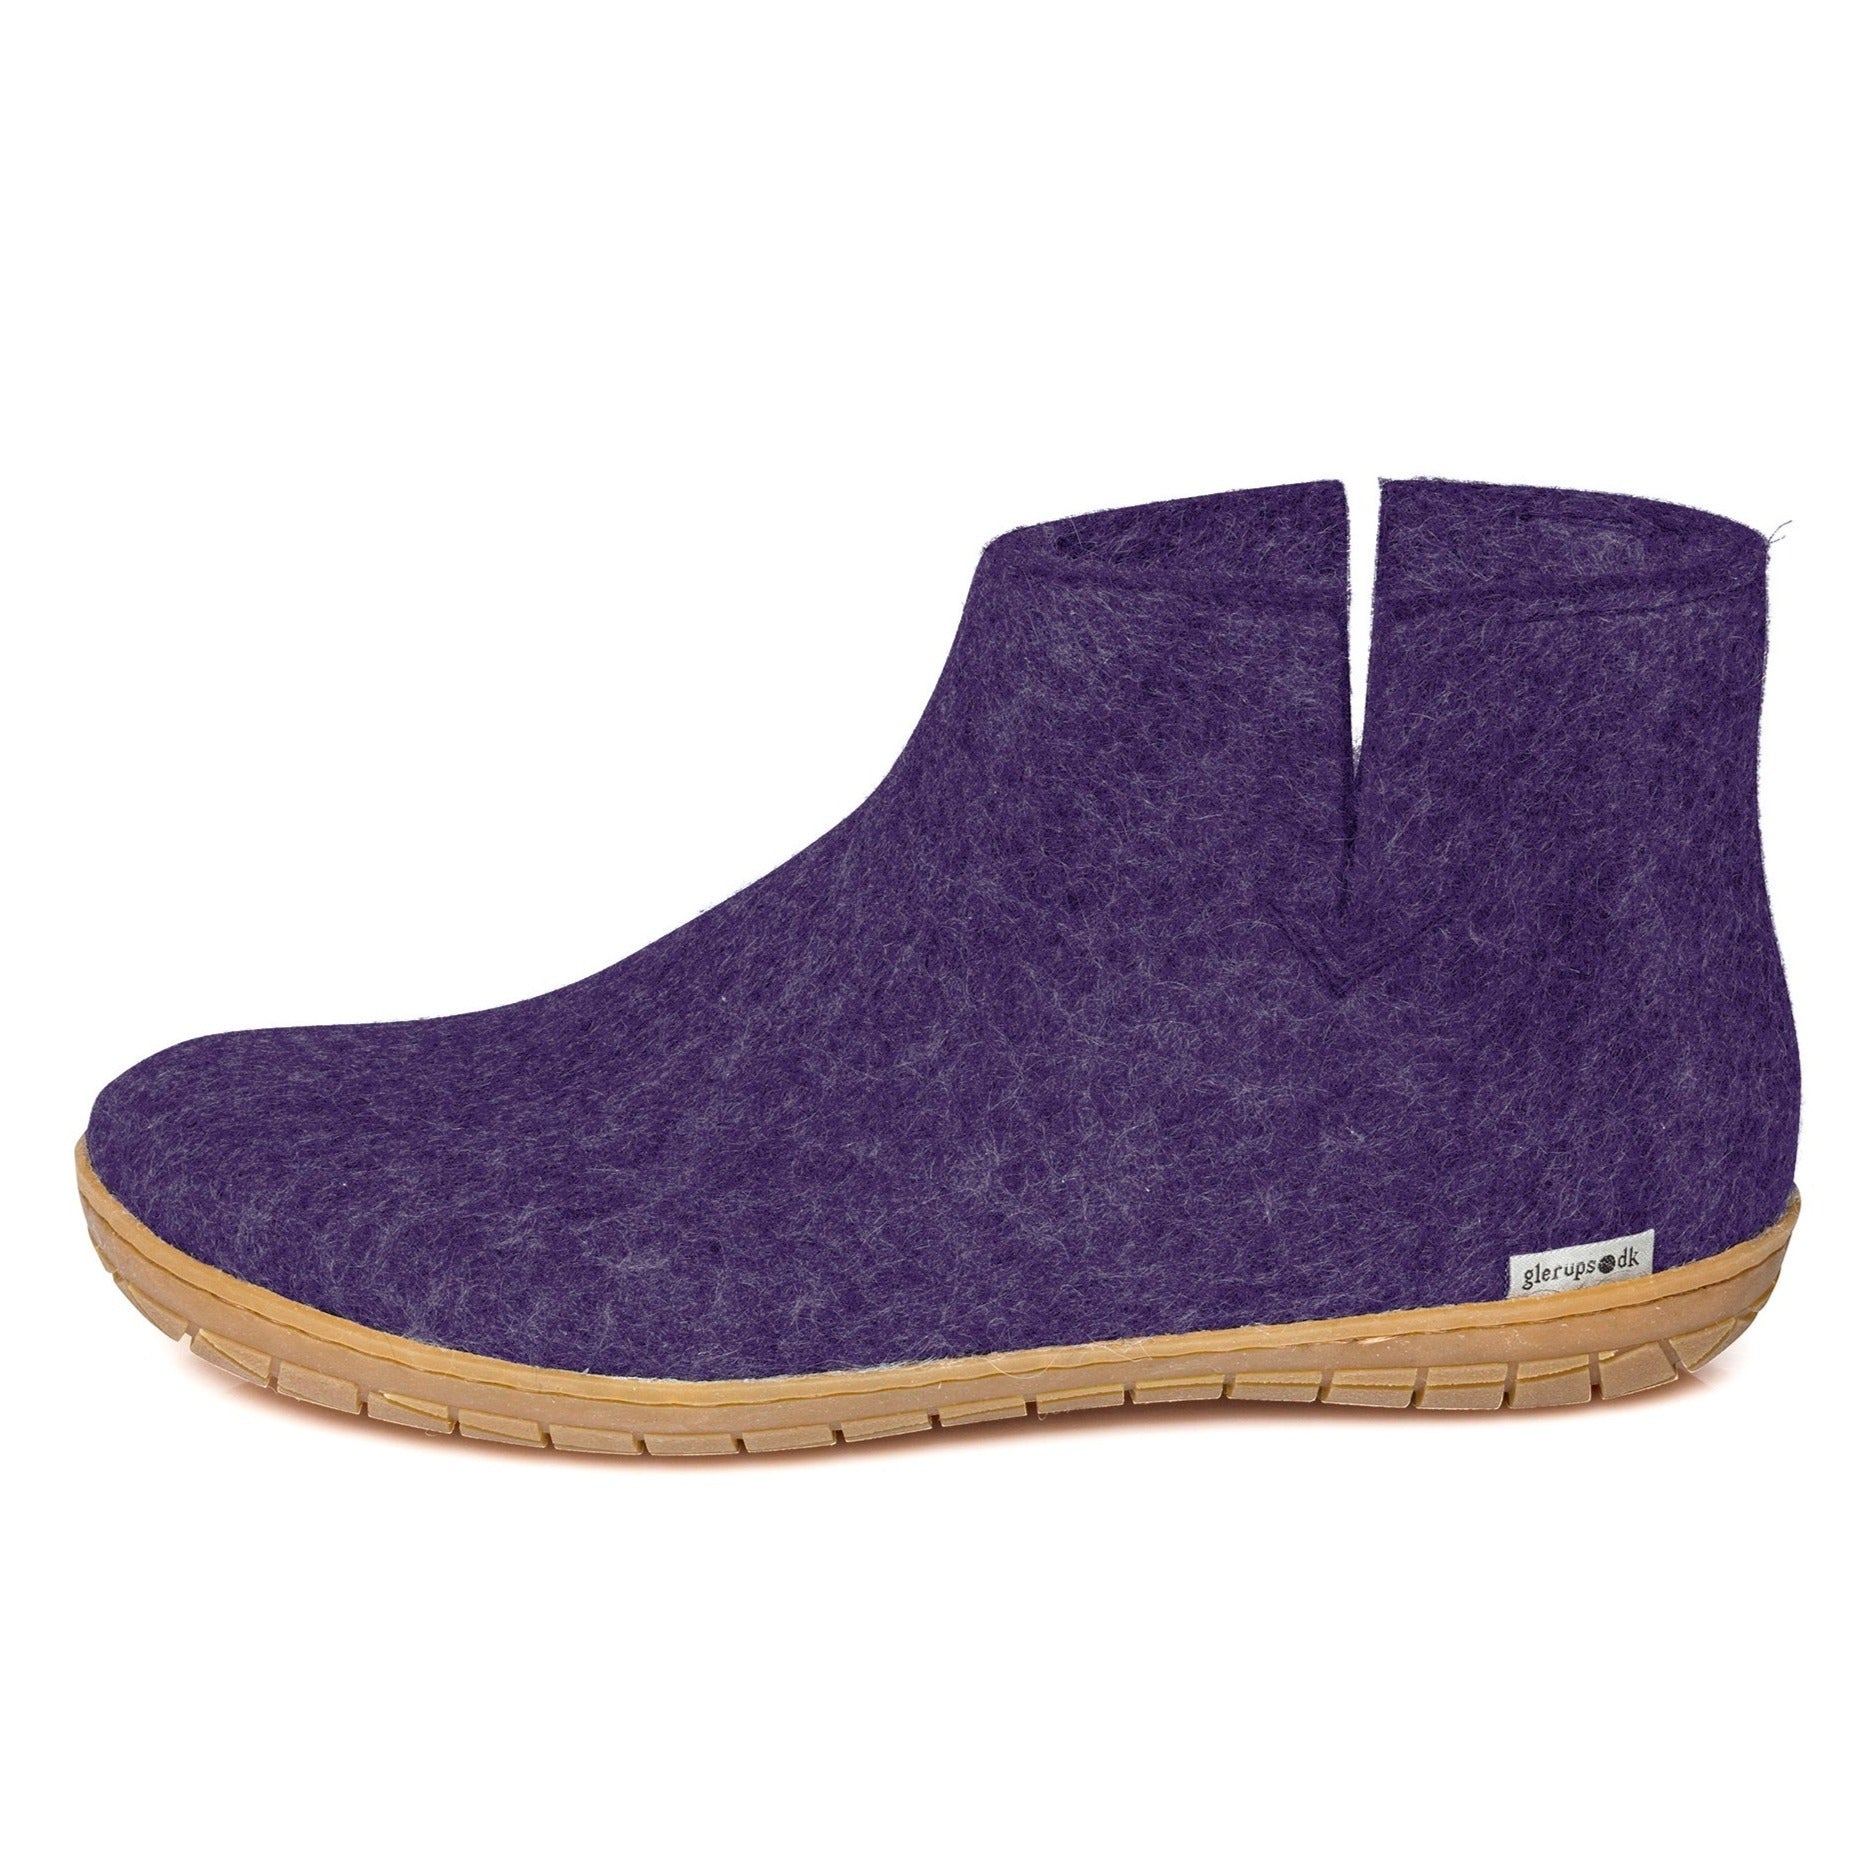 Glerups slipper ankle boot cut rubber sole purple